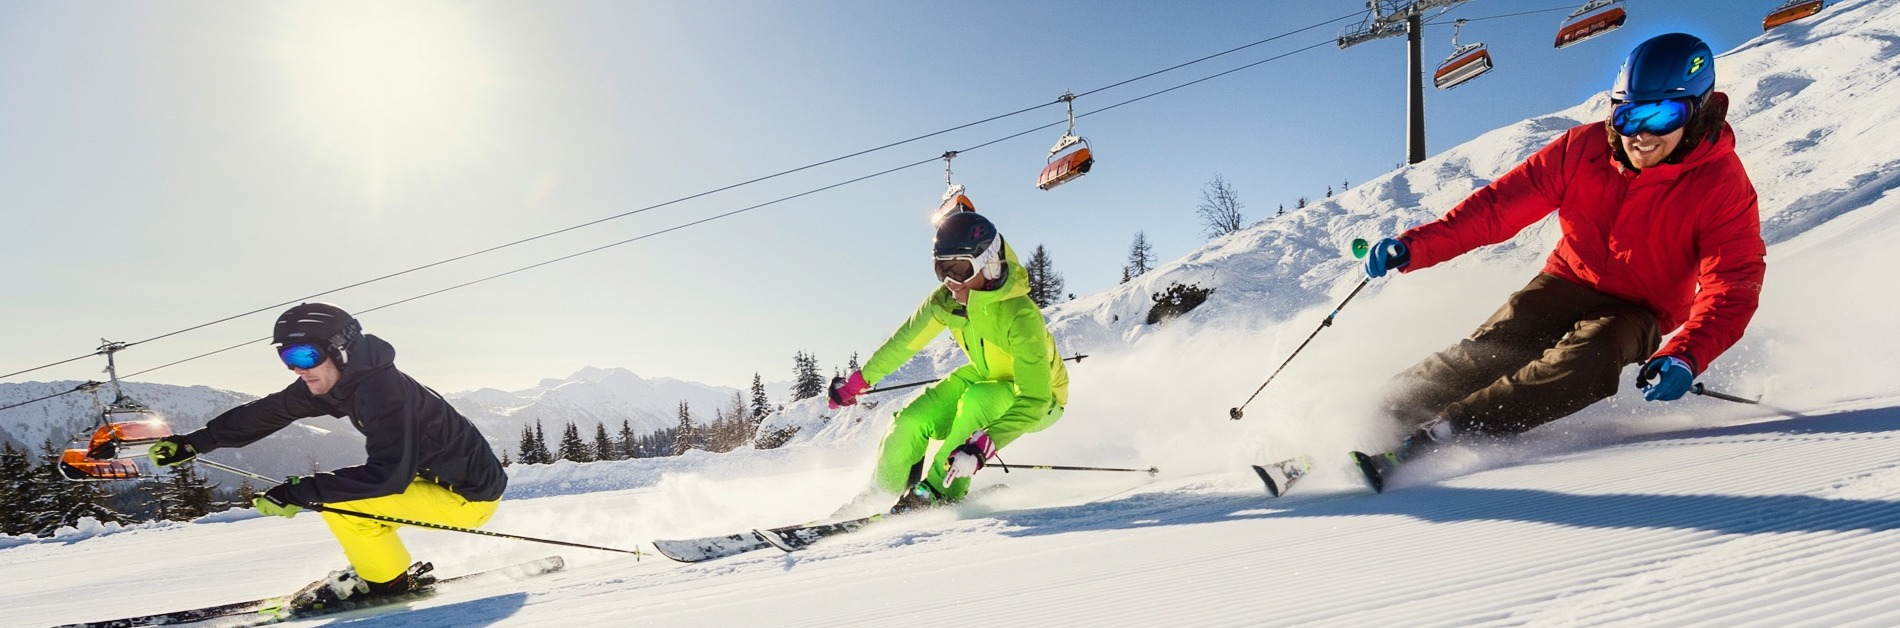 Ski amadé Bring-a-friend Skifahren Aktion